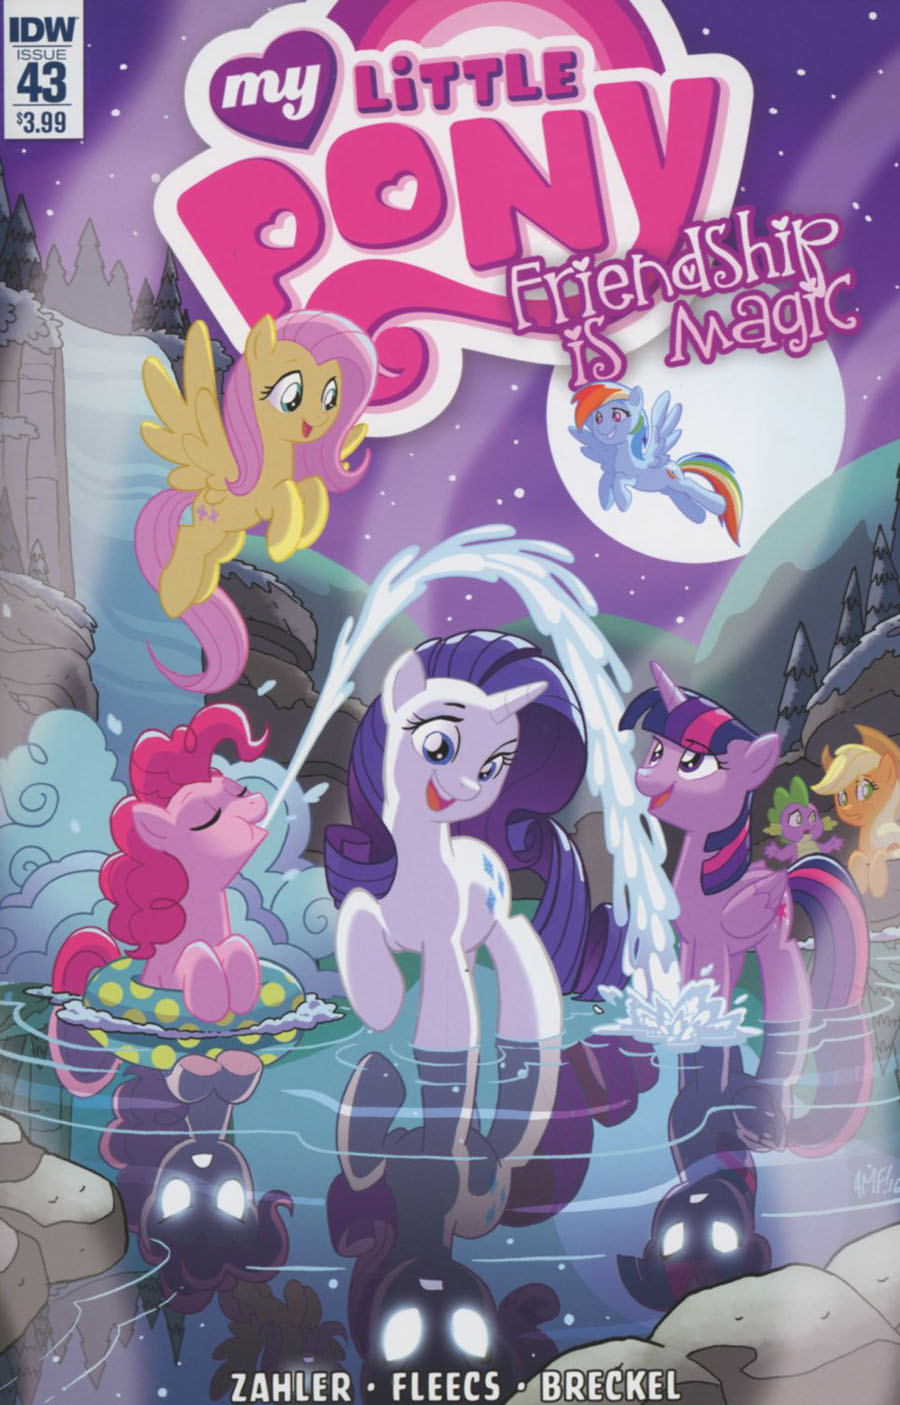 My Little Pony Friendship Is Magic #43 Cover A Regular Tony Fleecs Cover